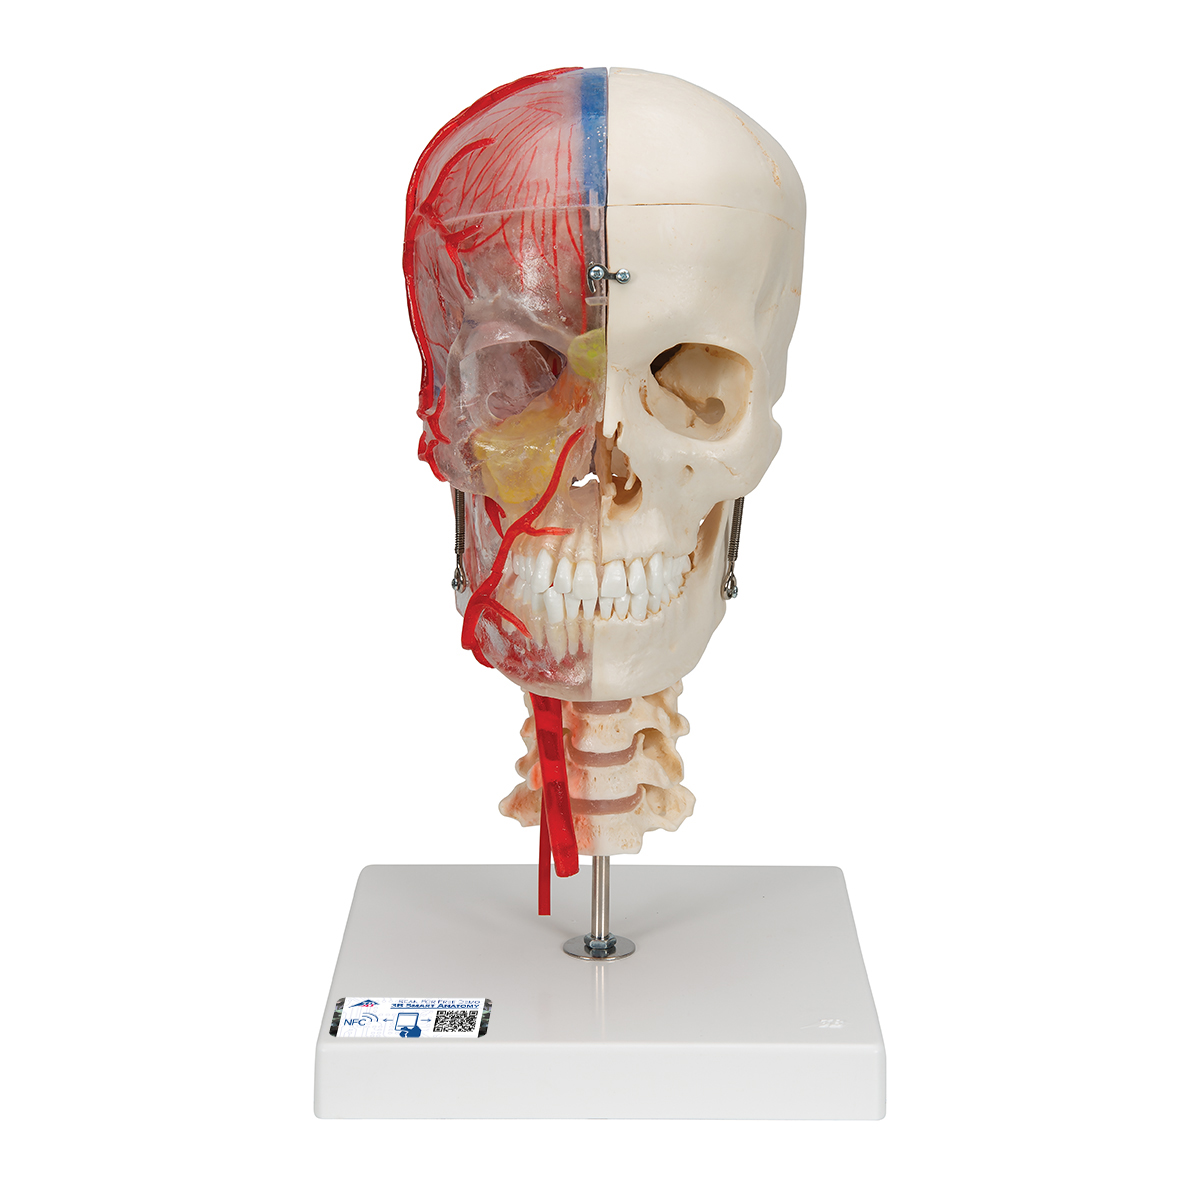 Anatomical Teaching Models, Plastic Vertebrae Model